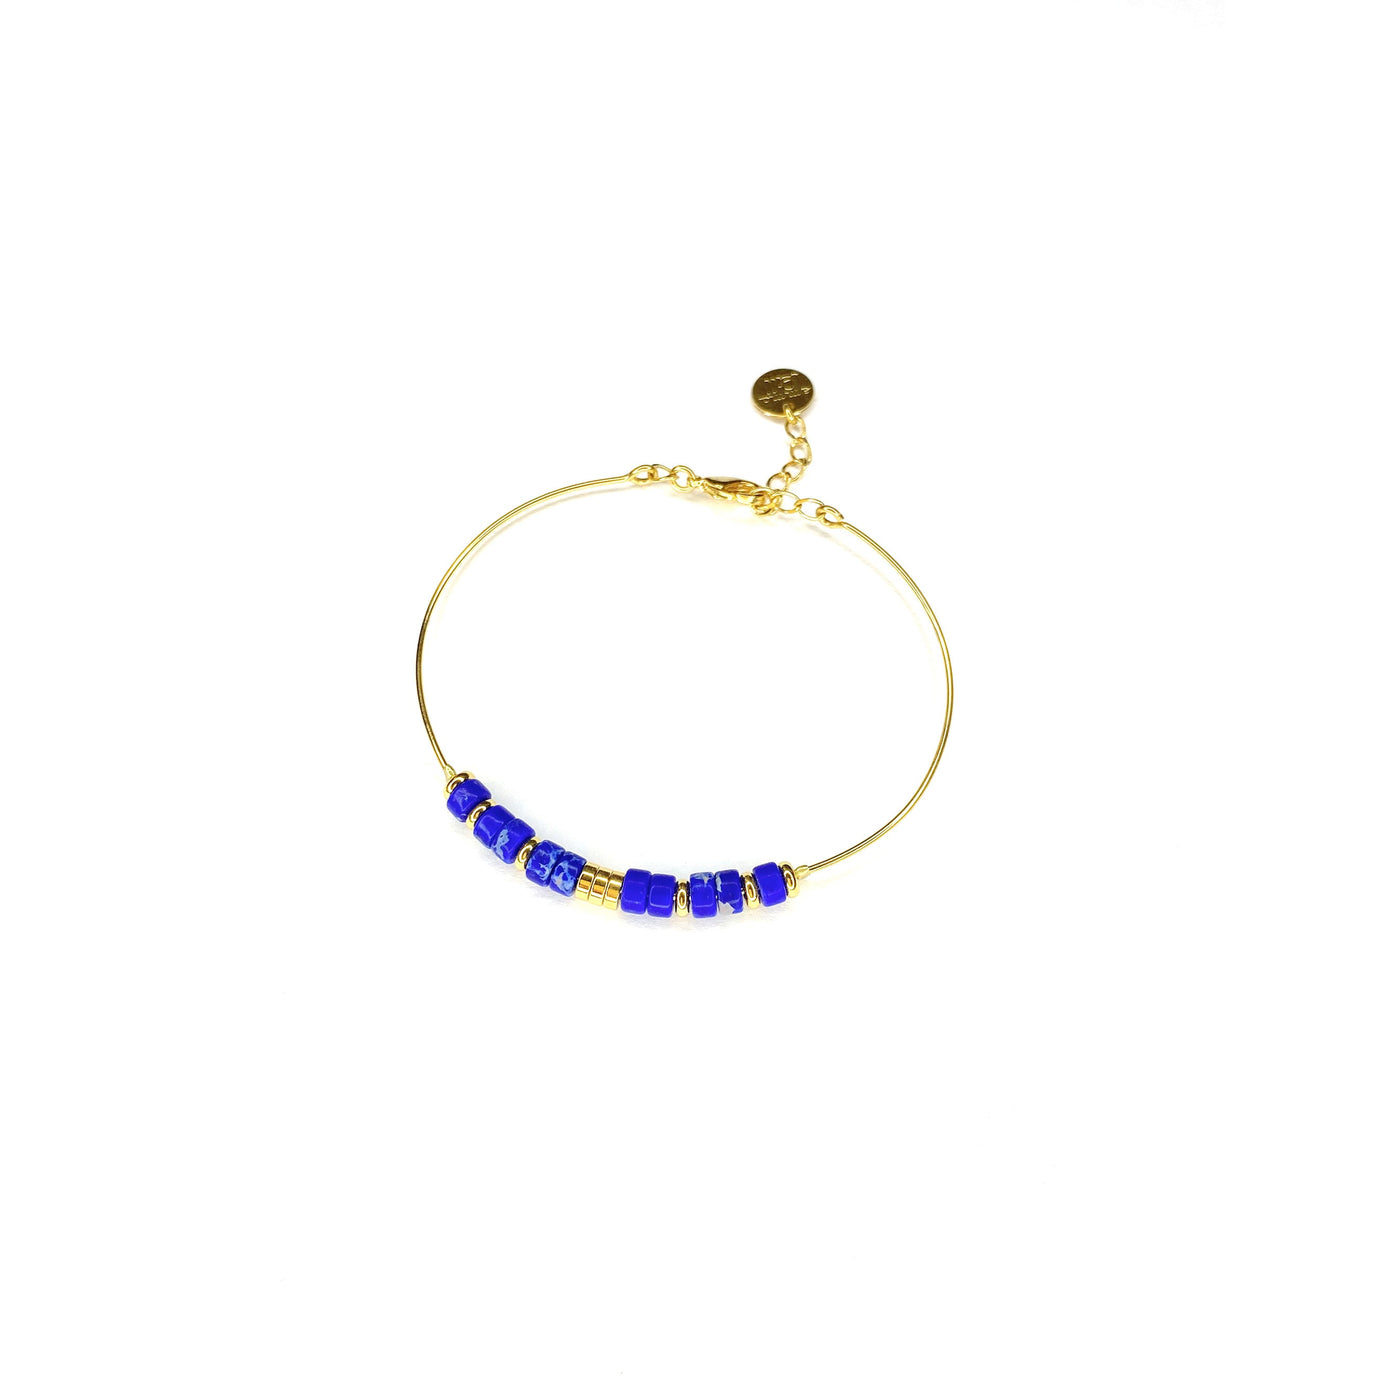 EDDY - Blue gold-plated bangle